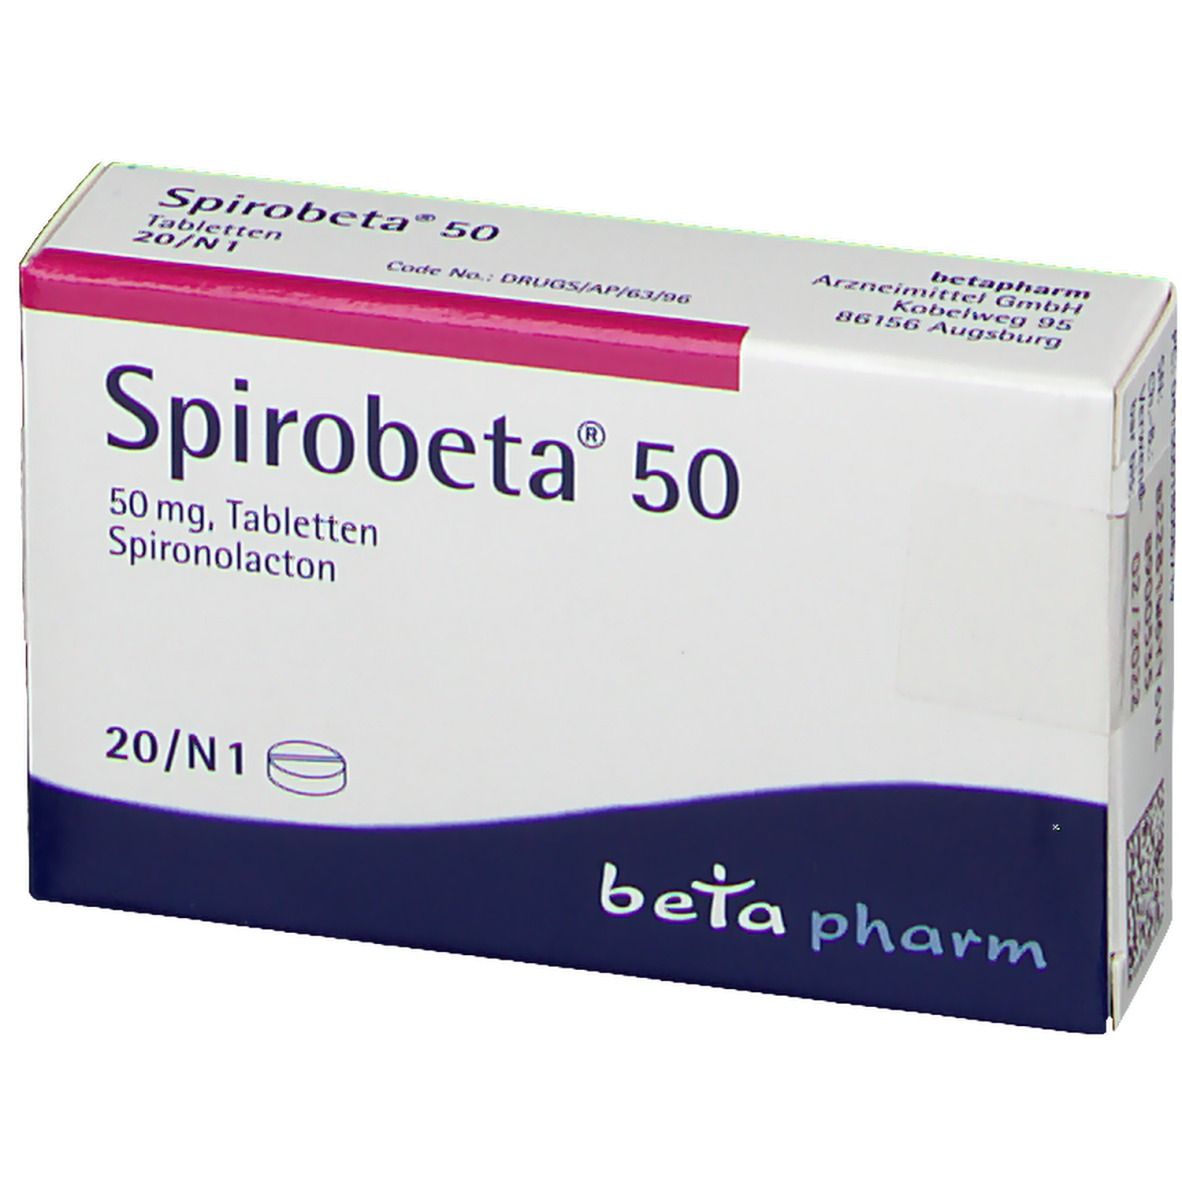 Spirobeta® 50